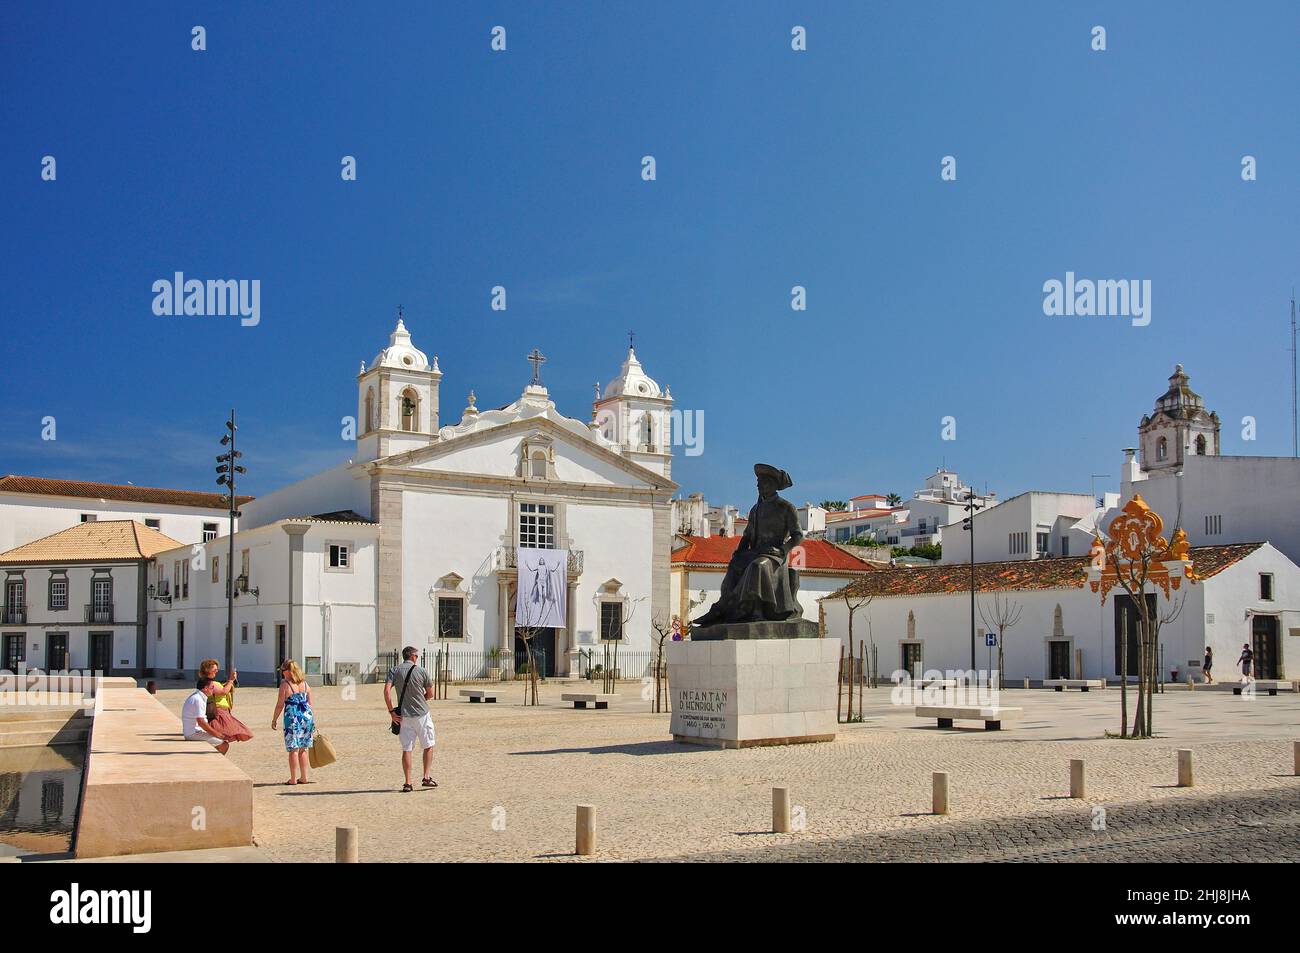 Praca da Republica, Lagos, Algarve Region, Portugal Stock Photo